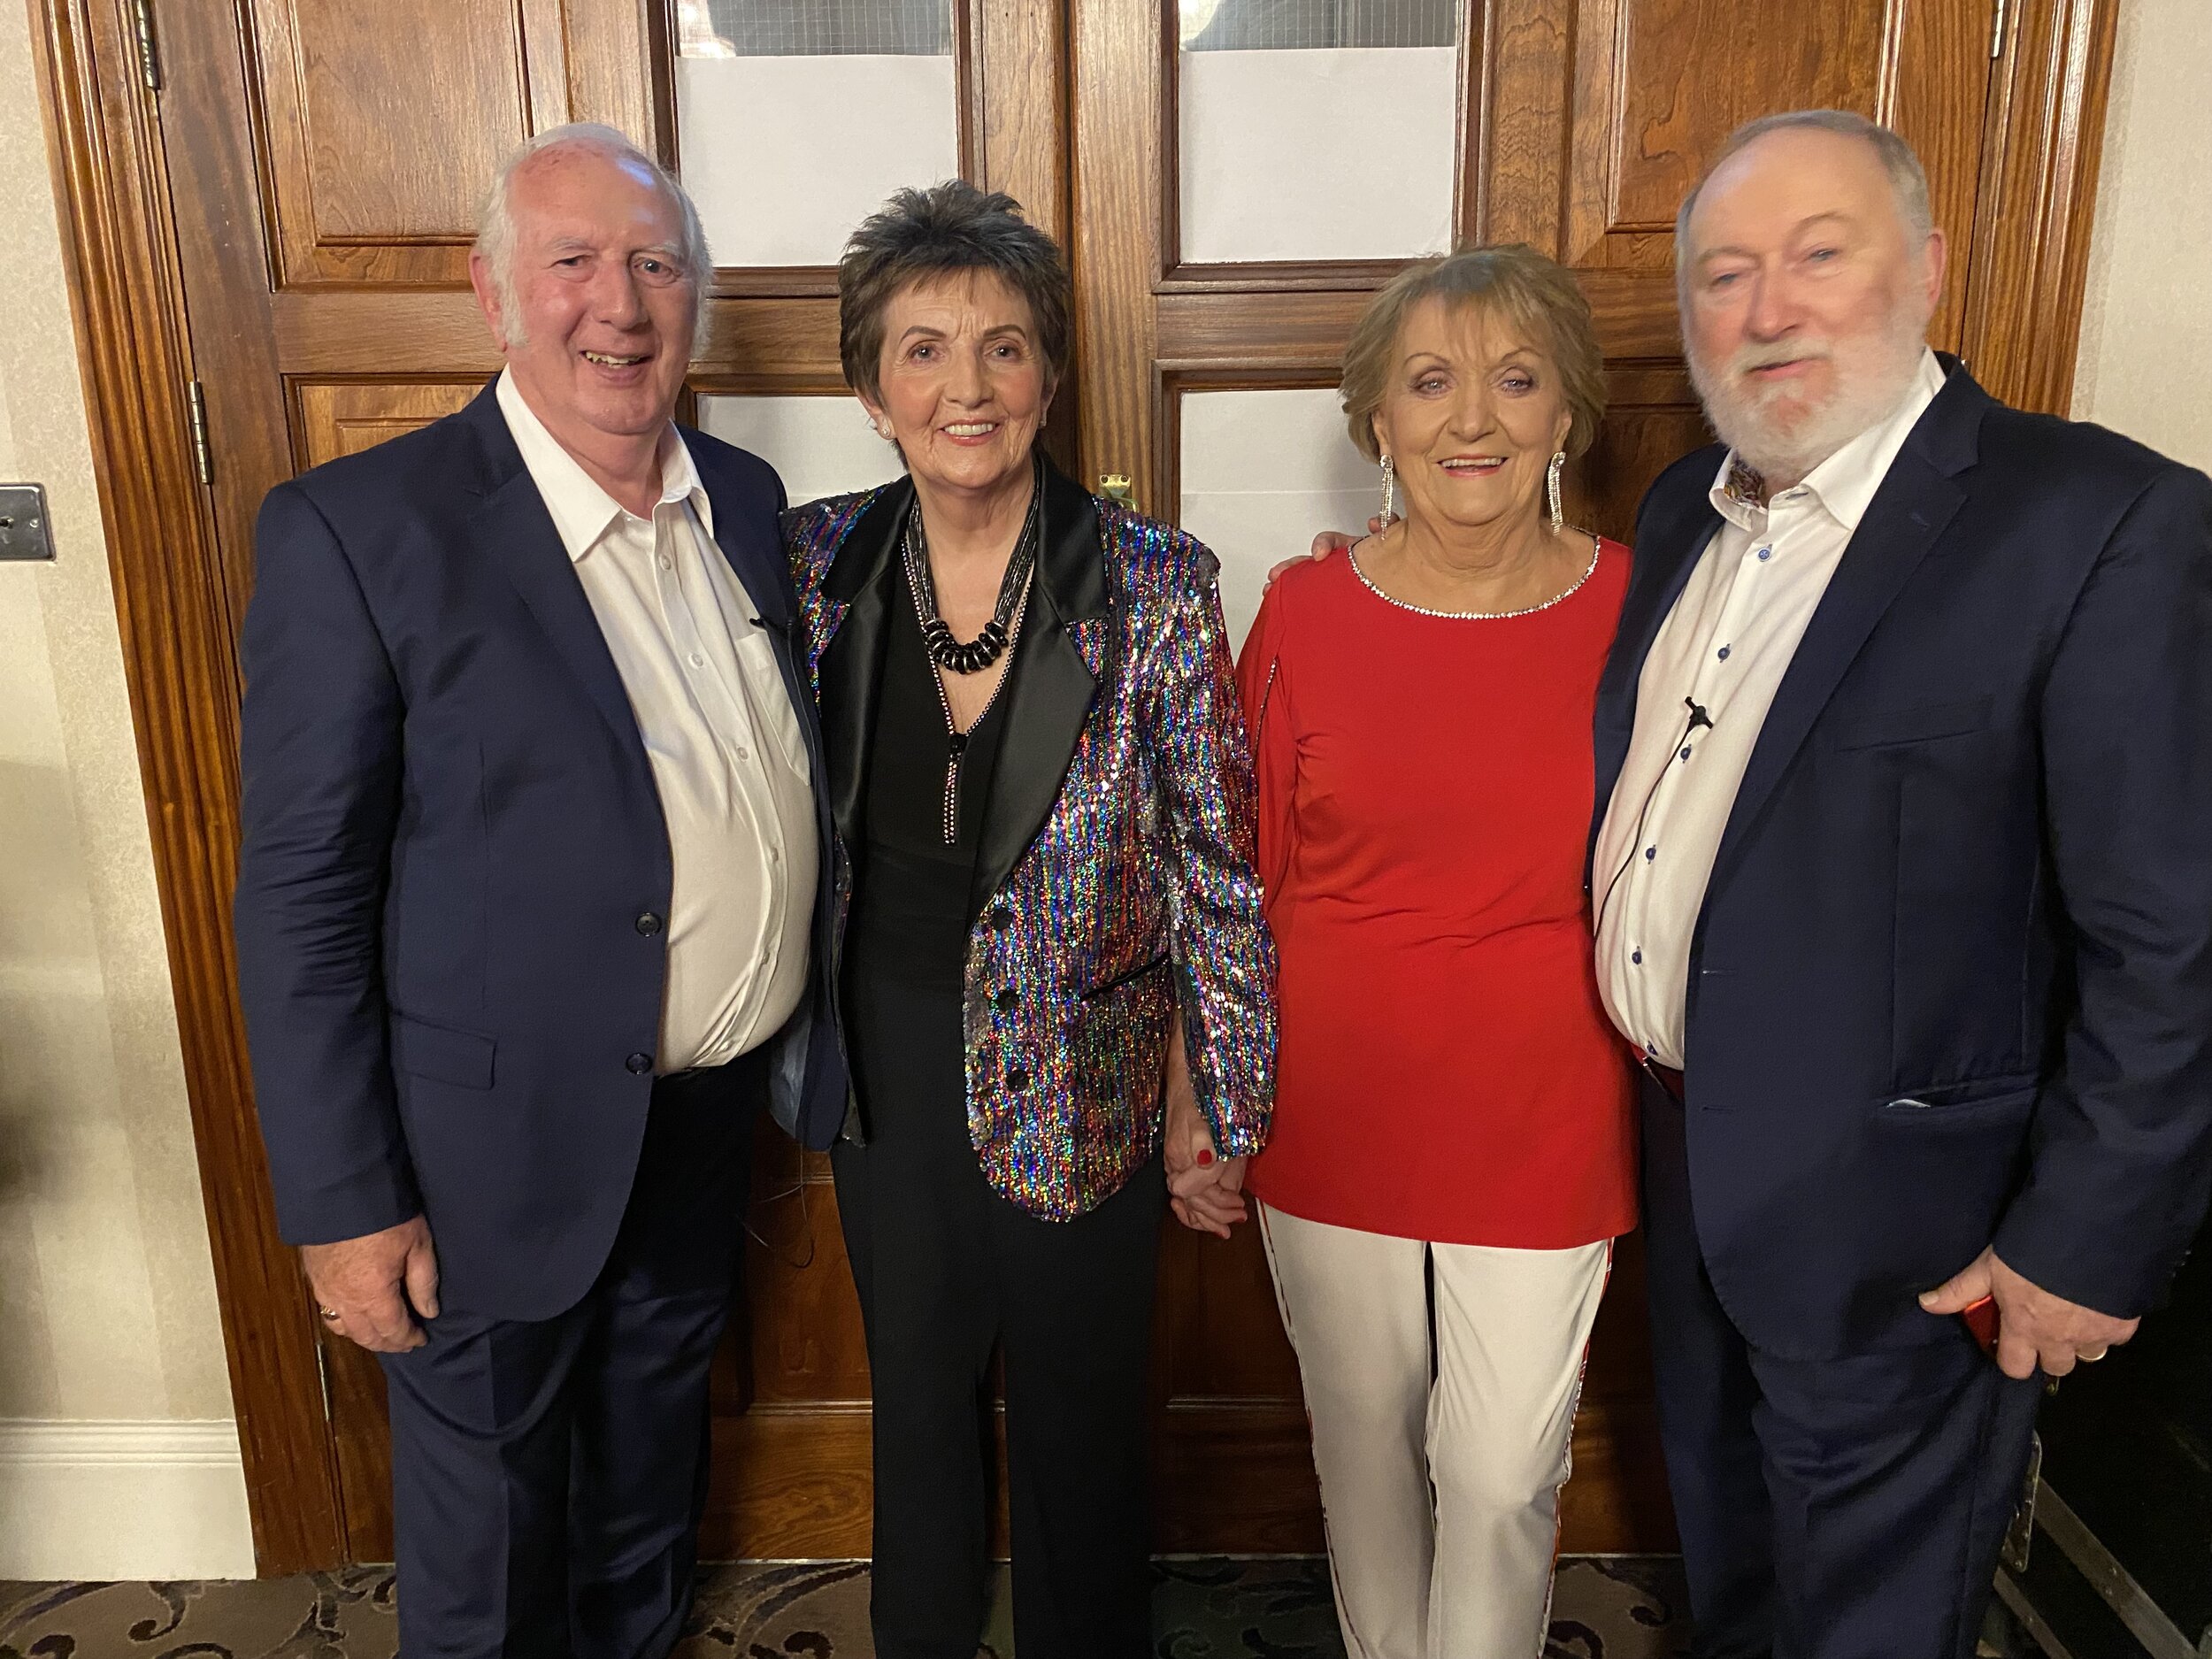  Mick Foster, Tony Allen and Philomena Begley in Killarney 